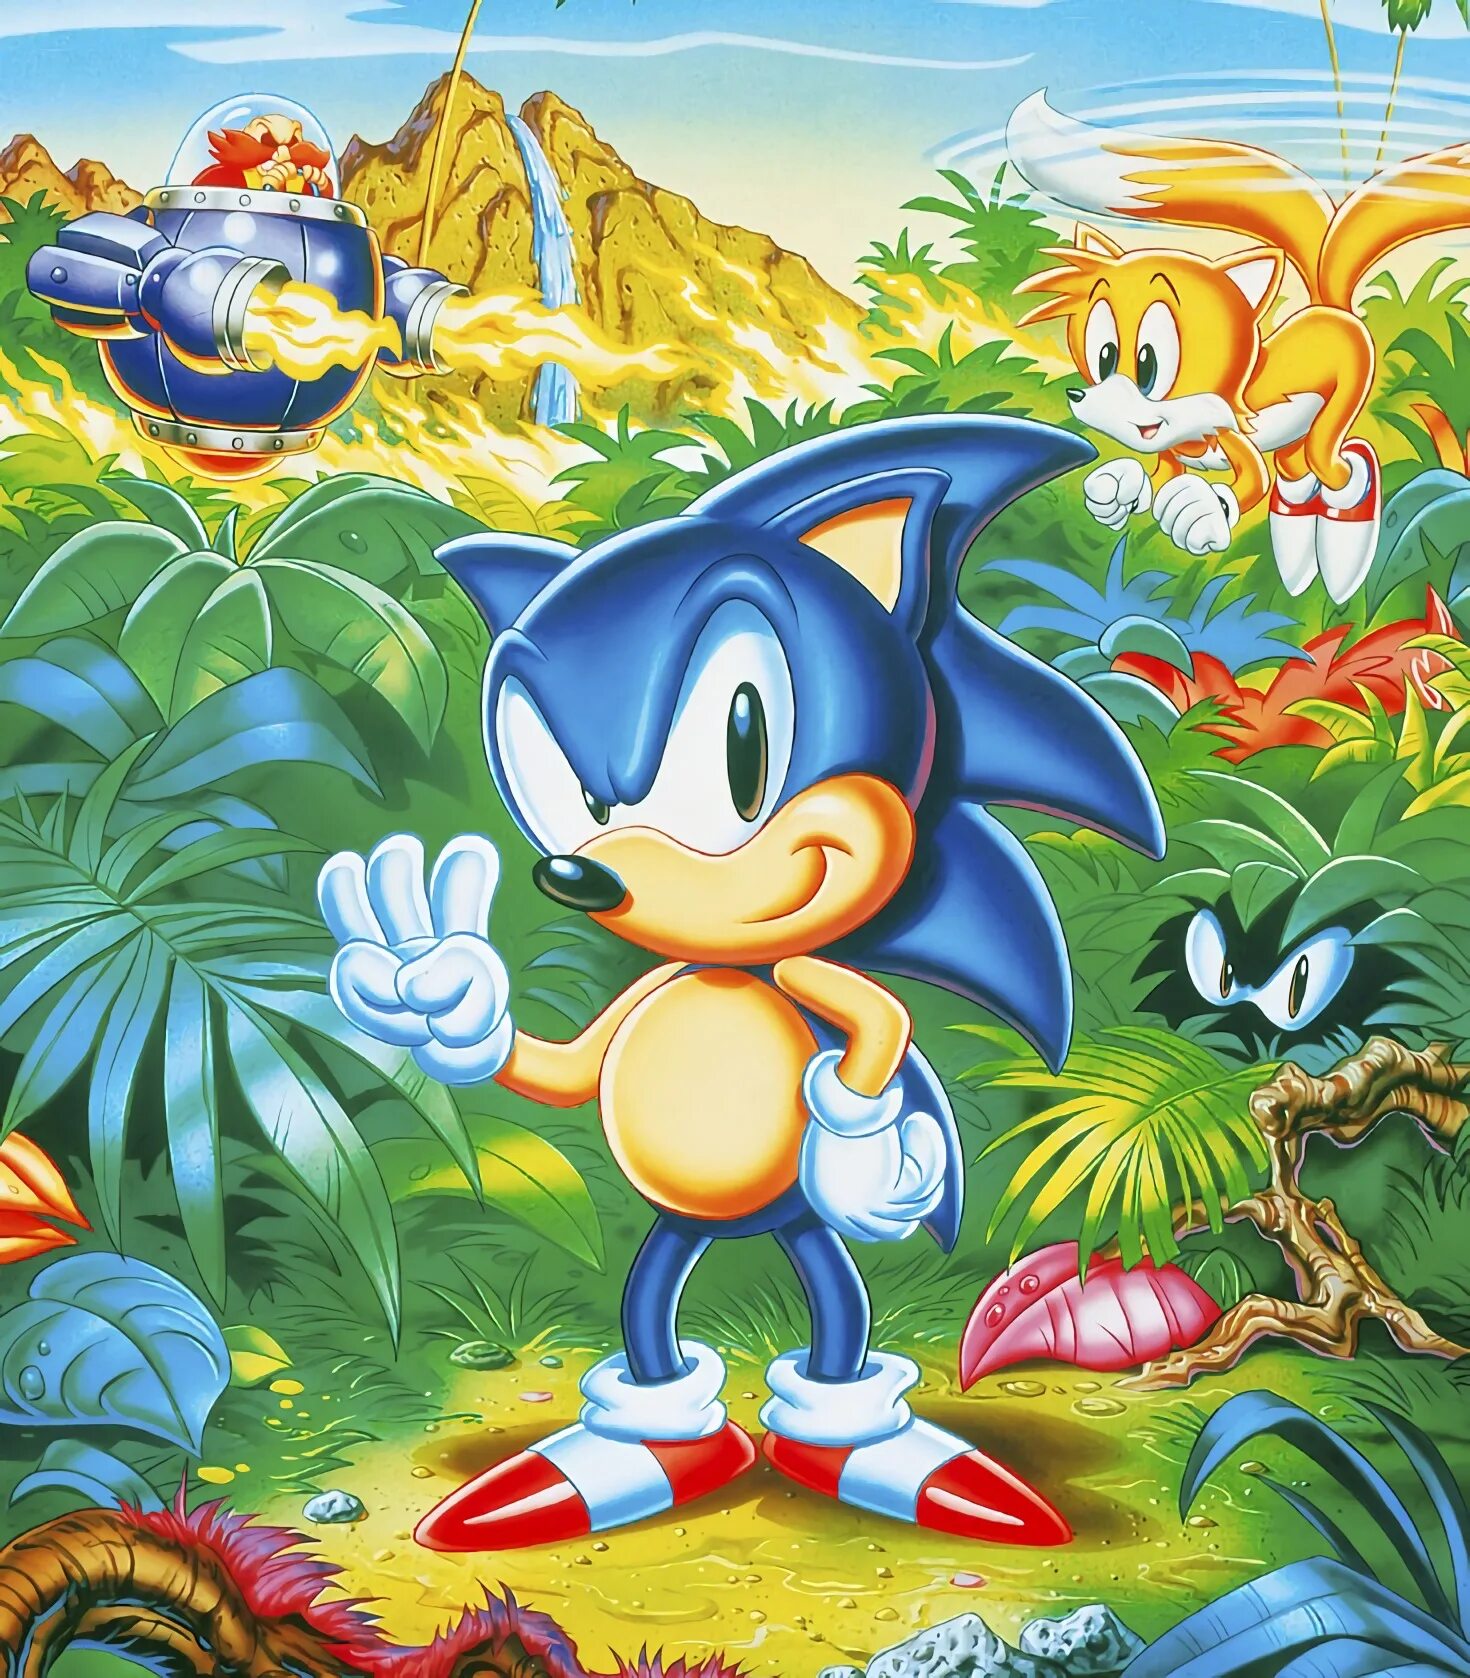 Uzmovi com sonic 3. Игра Sonic the Hedgehog 3. Sonic 3 Sega. Соник 1994. Соник 3 1994.